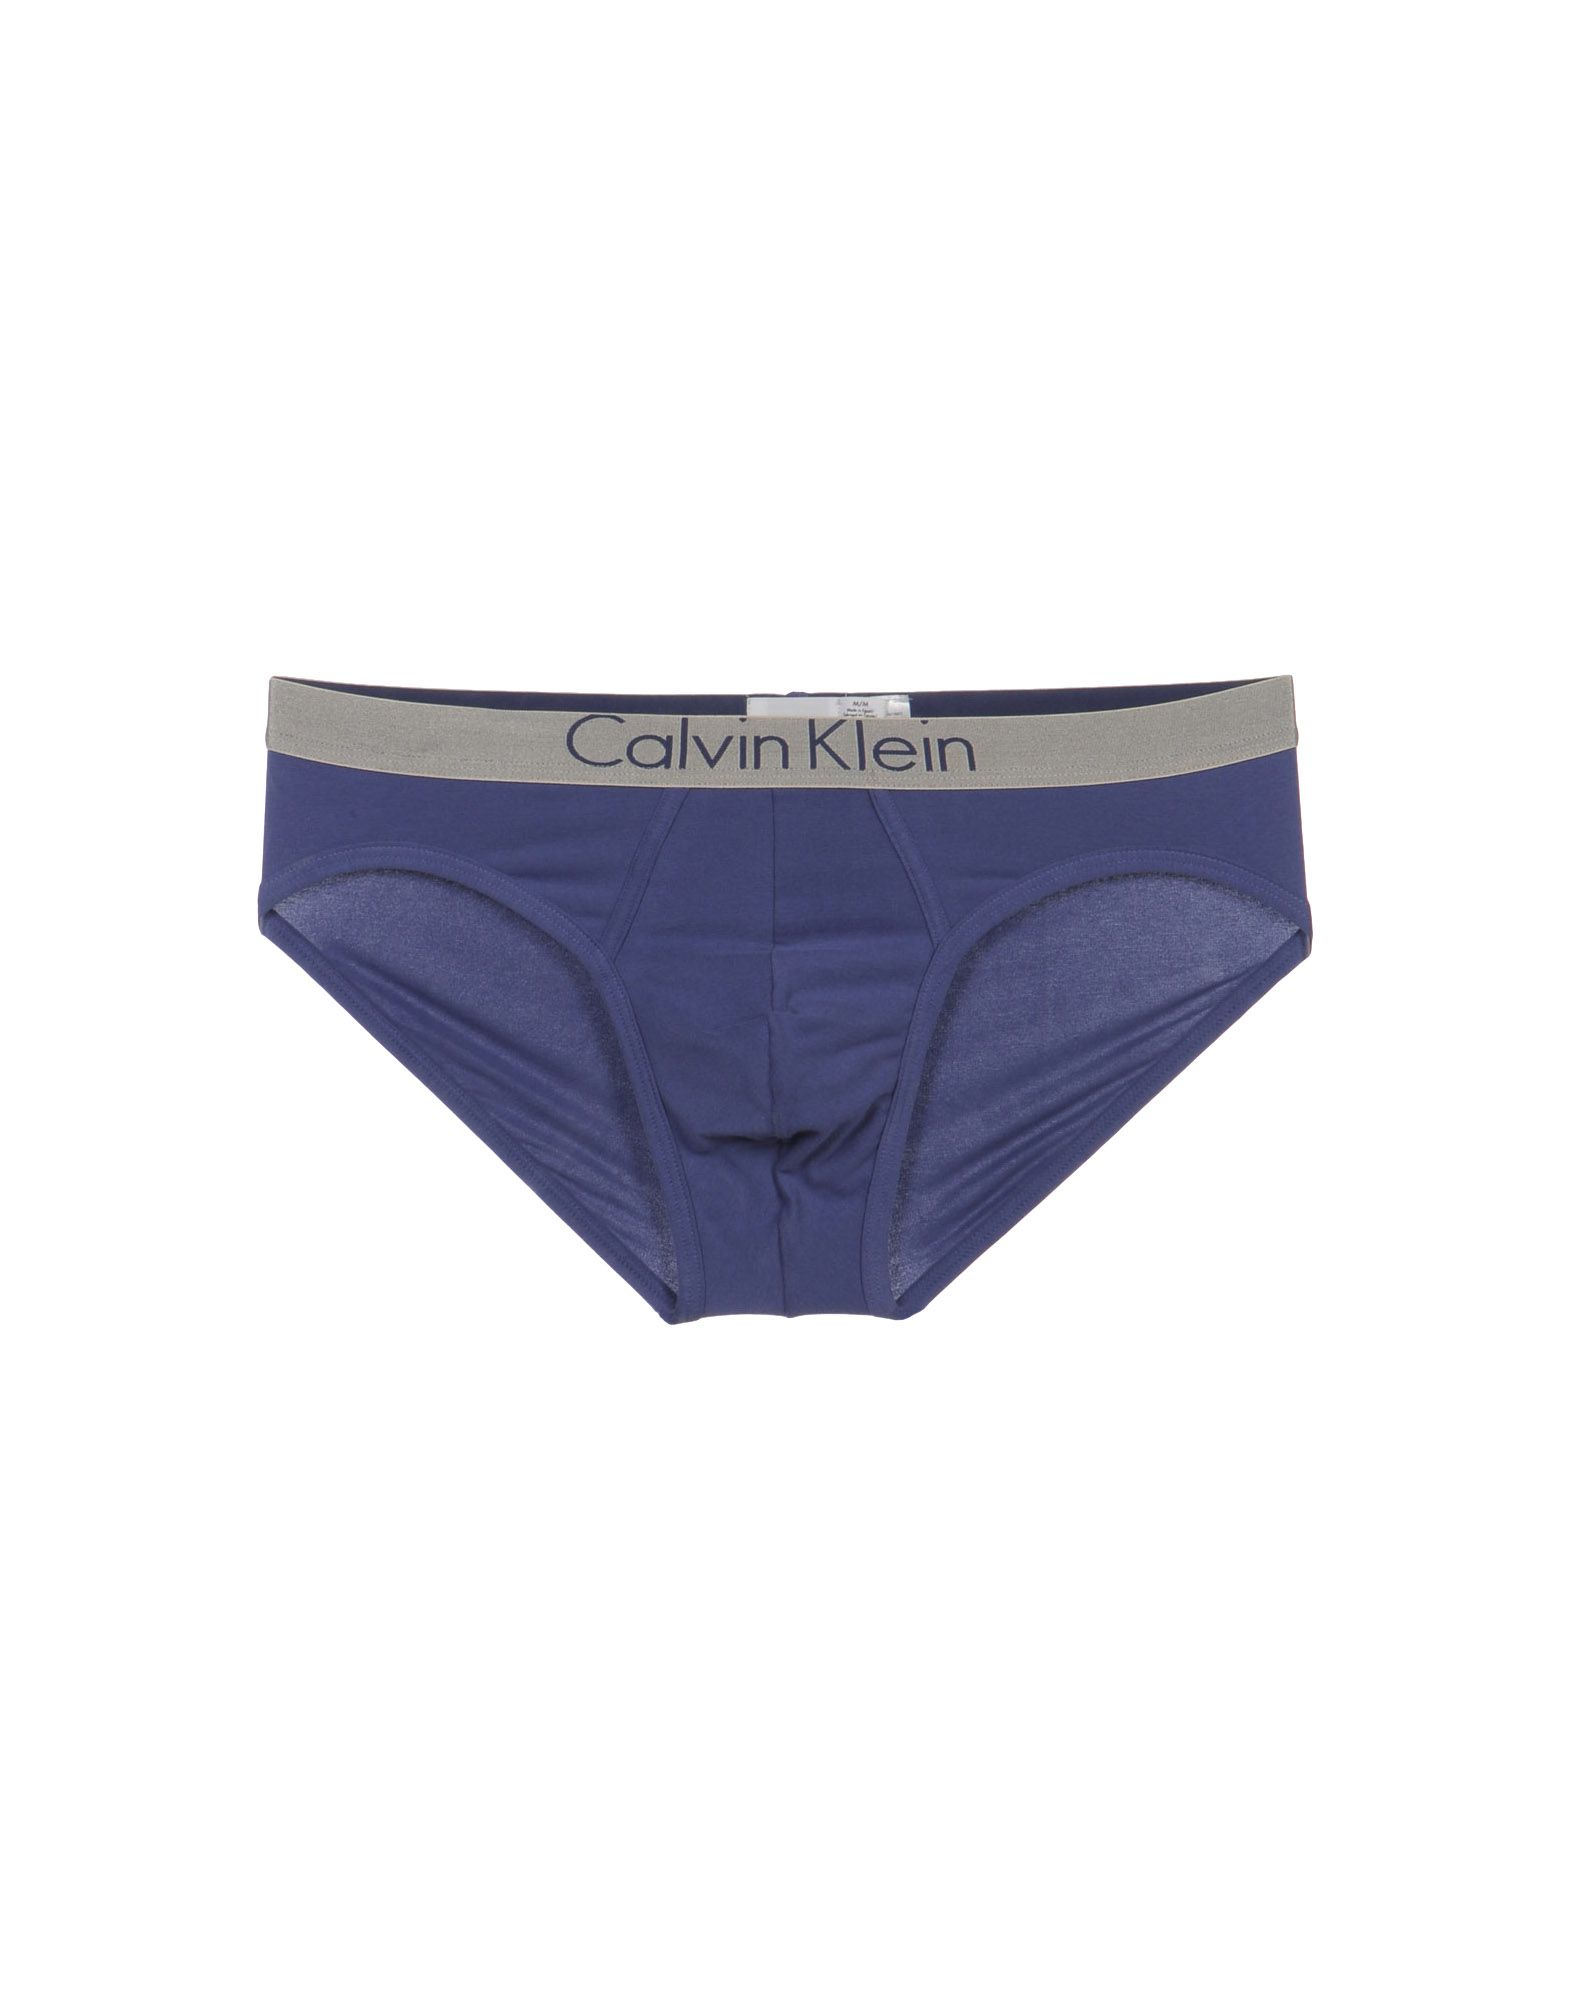 Foto Calvin Klein Underwear Slips Hombre Azul marino foto 788759